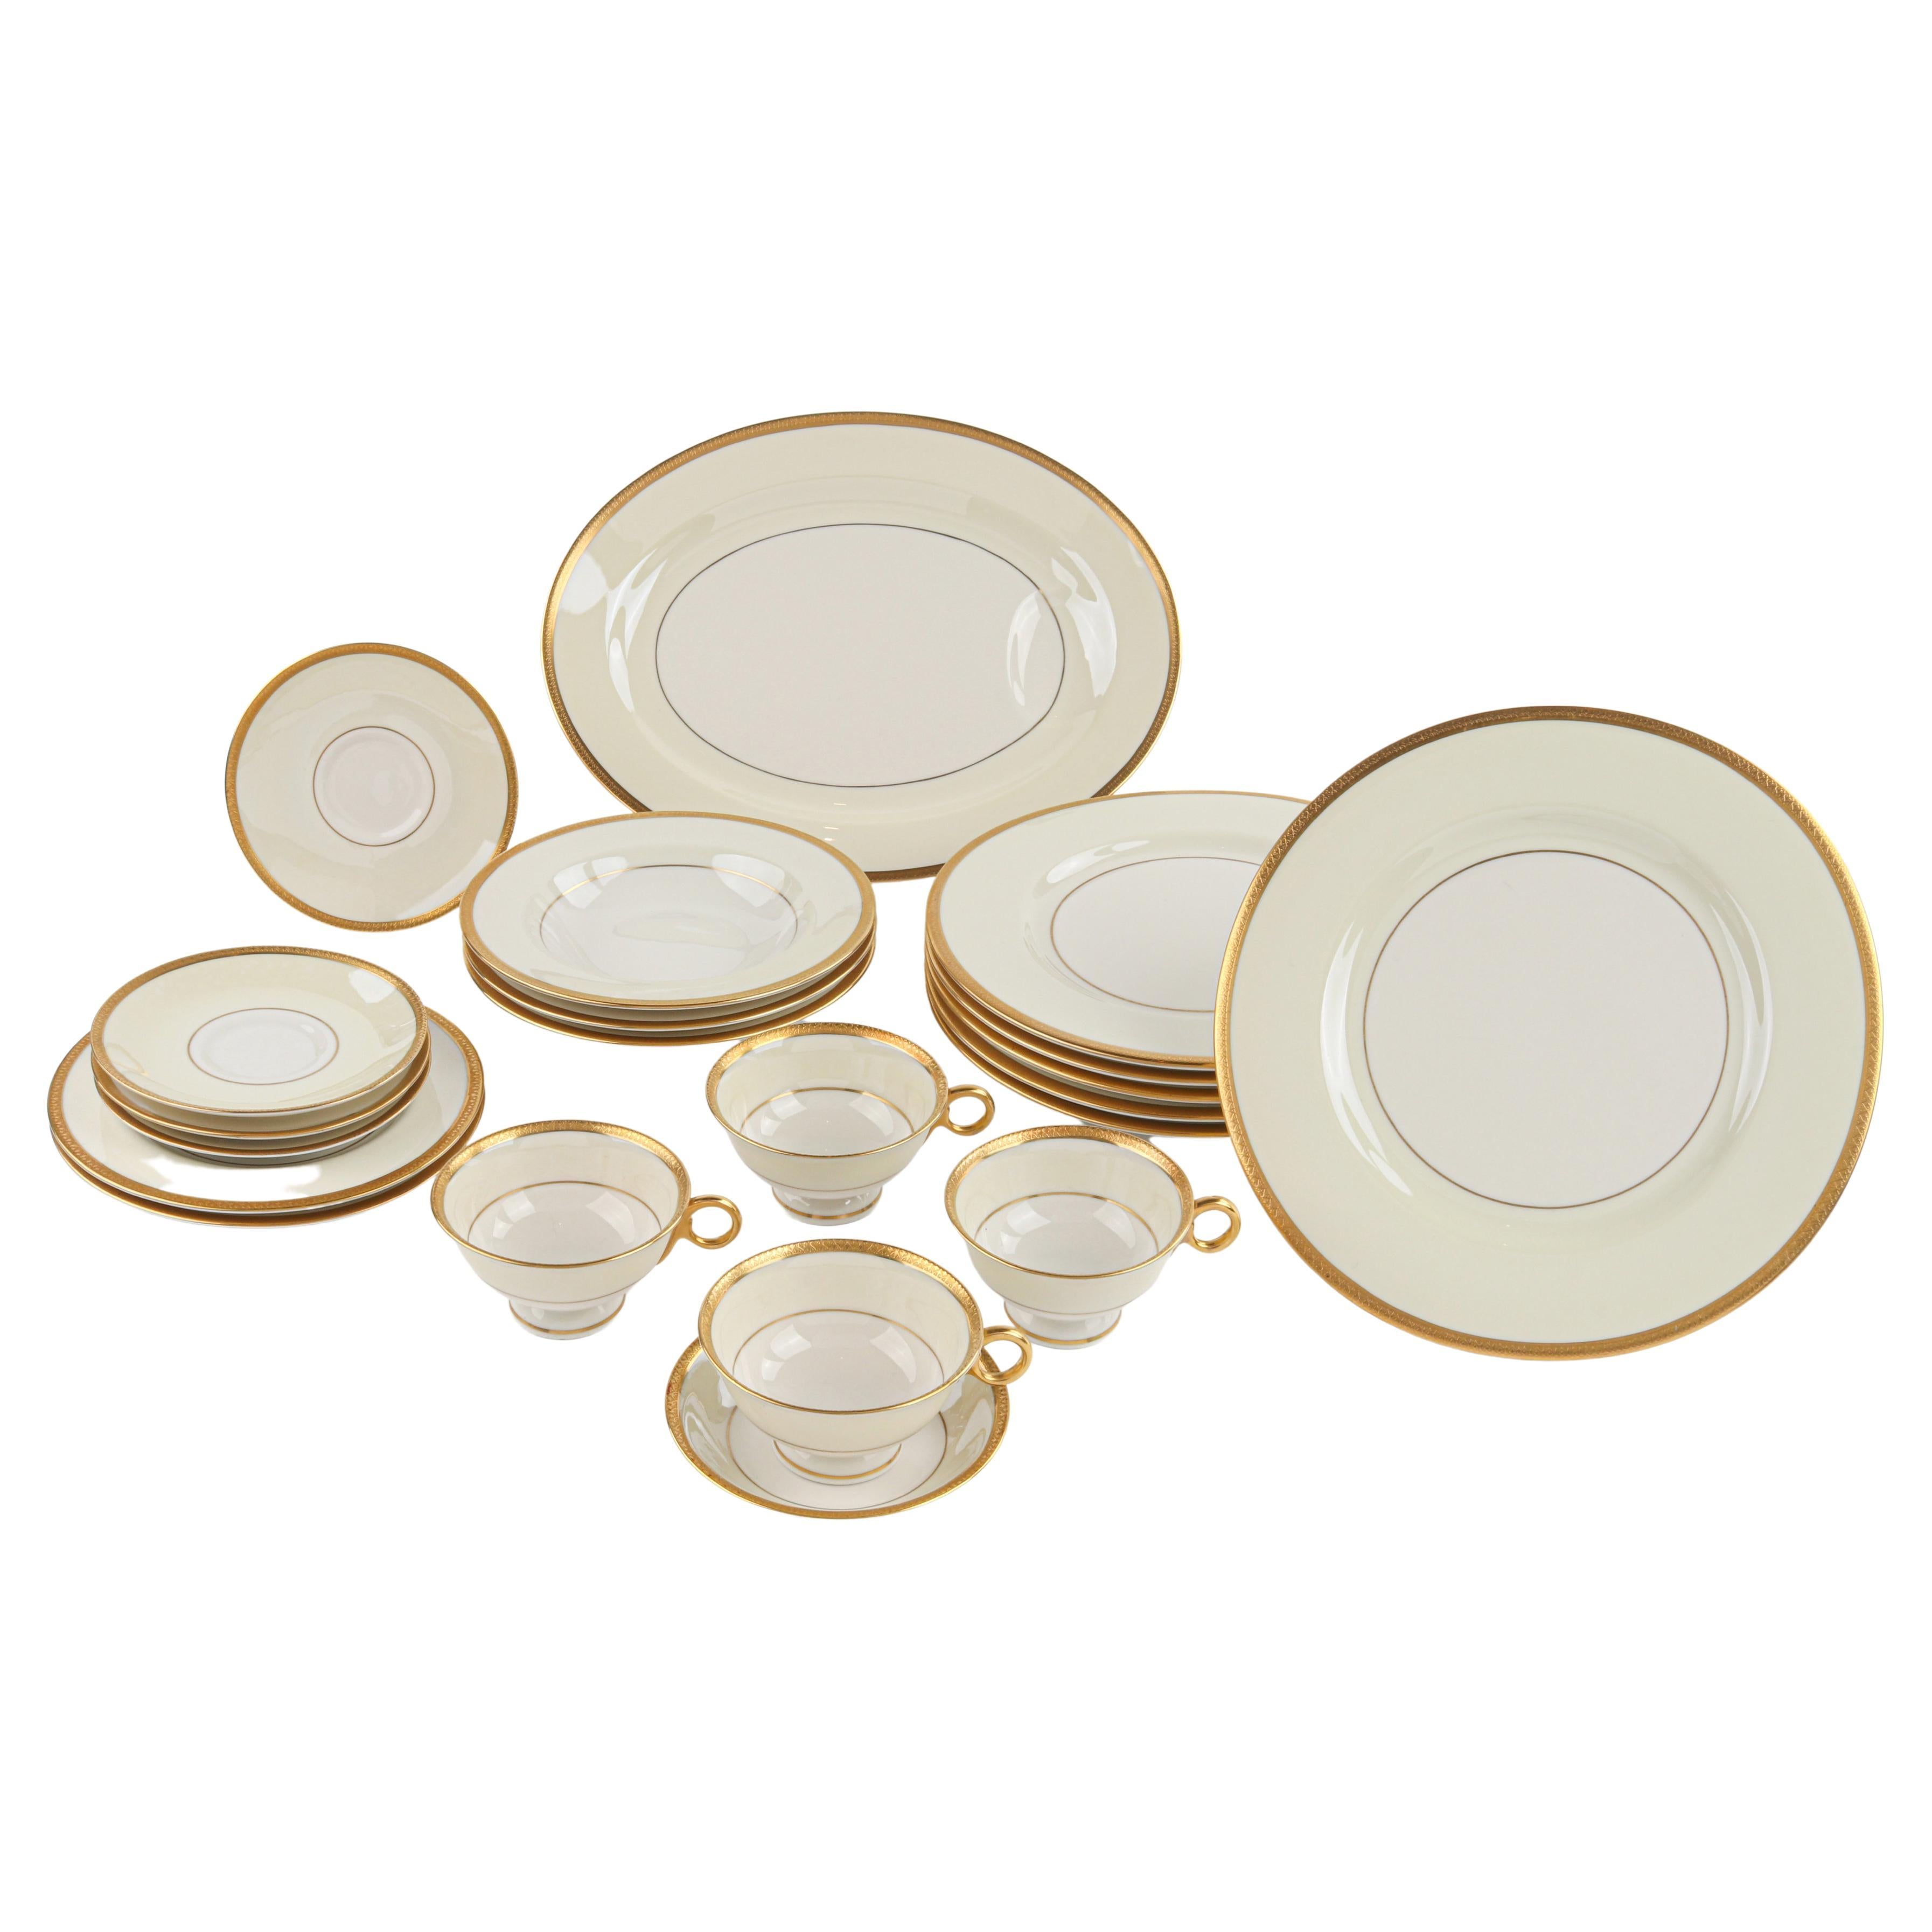 C.C.C. Théodore Haviland "Gold Encrusted Hearts" 21pc Porcelain Dinnerware Set